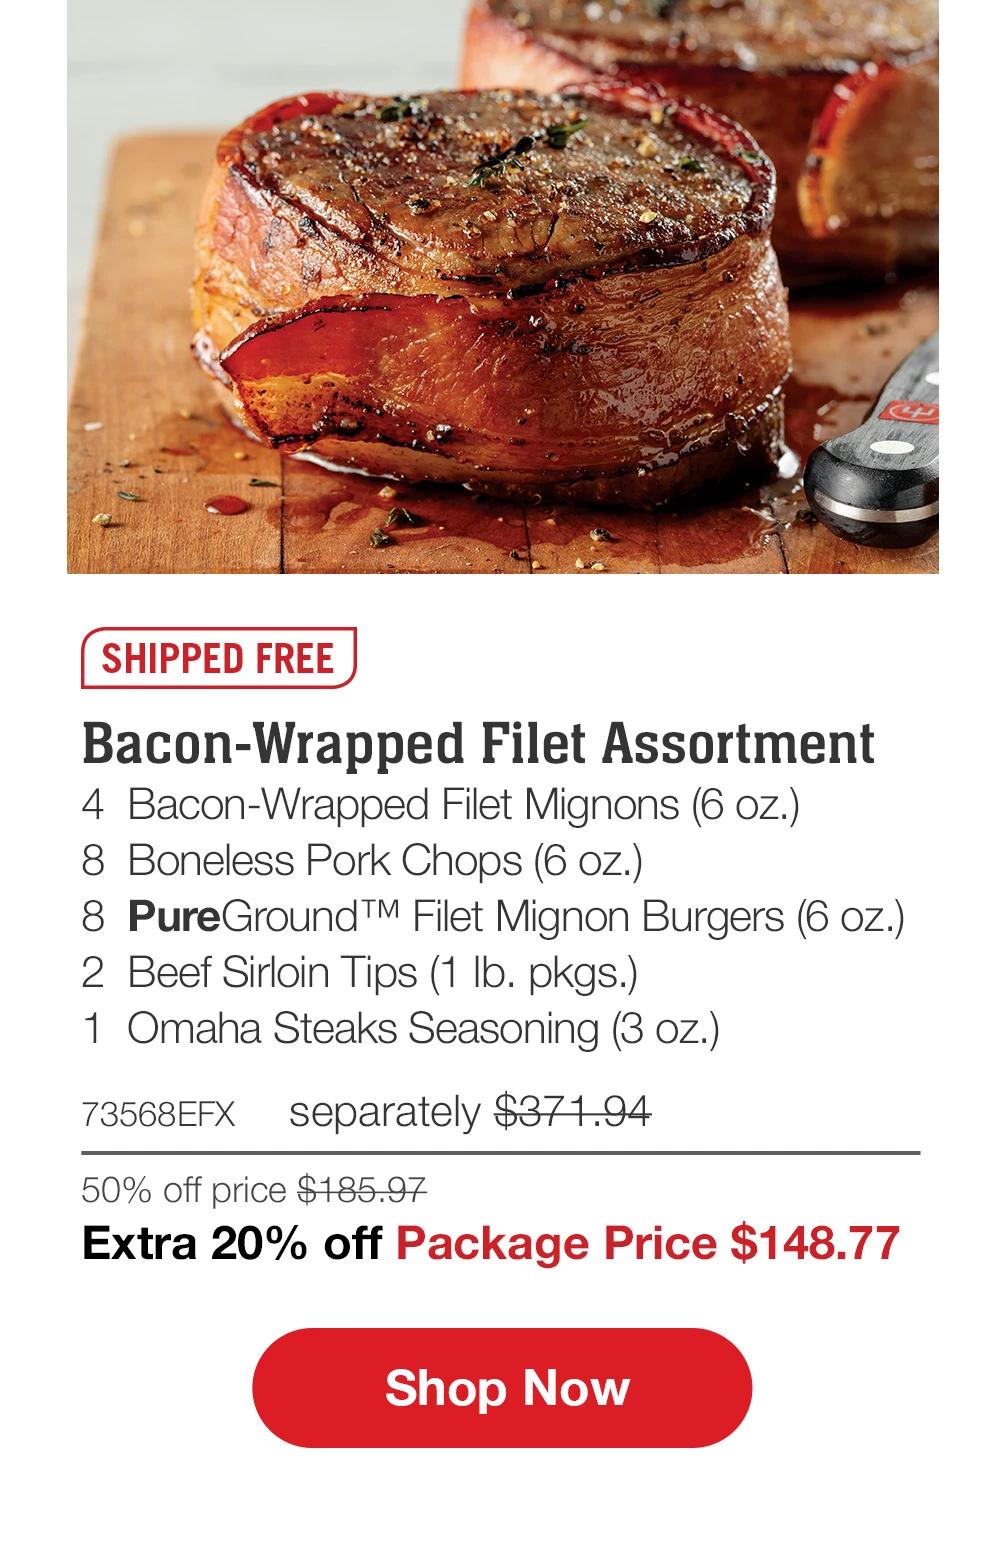 SHIPPED FREE | Bacon-Wrapped Filet Assortment - 4  Bacon-Wrapped Filet Mignons (6 oz.) - 8  Boneless Pork Chops (6 oz.) - 8  PureGround™ Filet Mignon Burgers (6 oz.) - 2  Beef Sirloin Tips (1 lb. pkgs.) - 1  Omaha Steaks Seasoning (3 oz.) - 73568EFX separately $371.94 | 50% off price $185.97 | Extra 20% off Package Price $148.77 || SHOP NOW